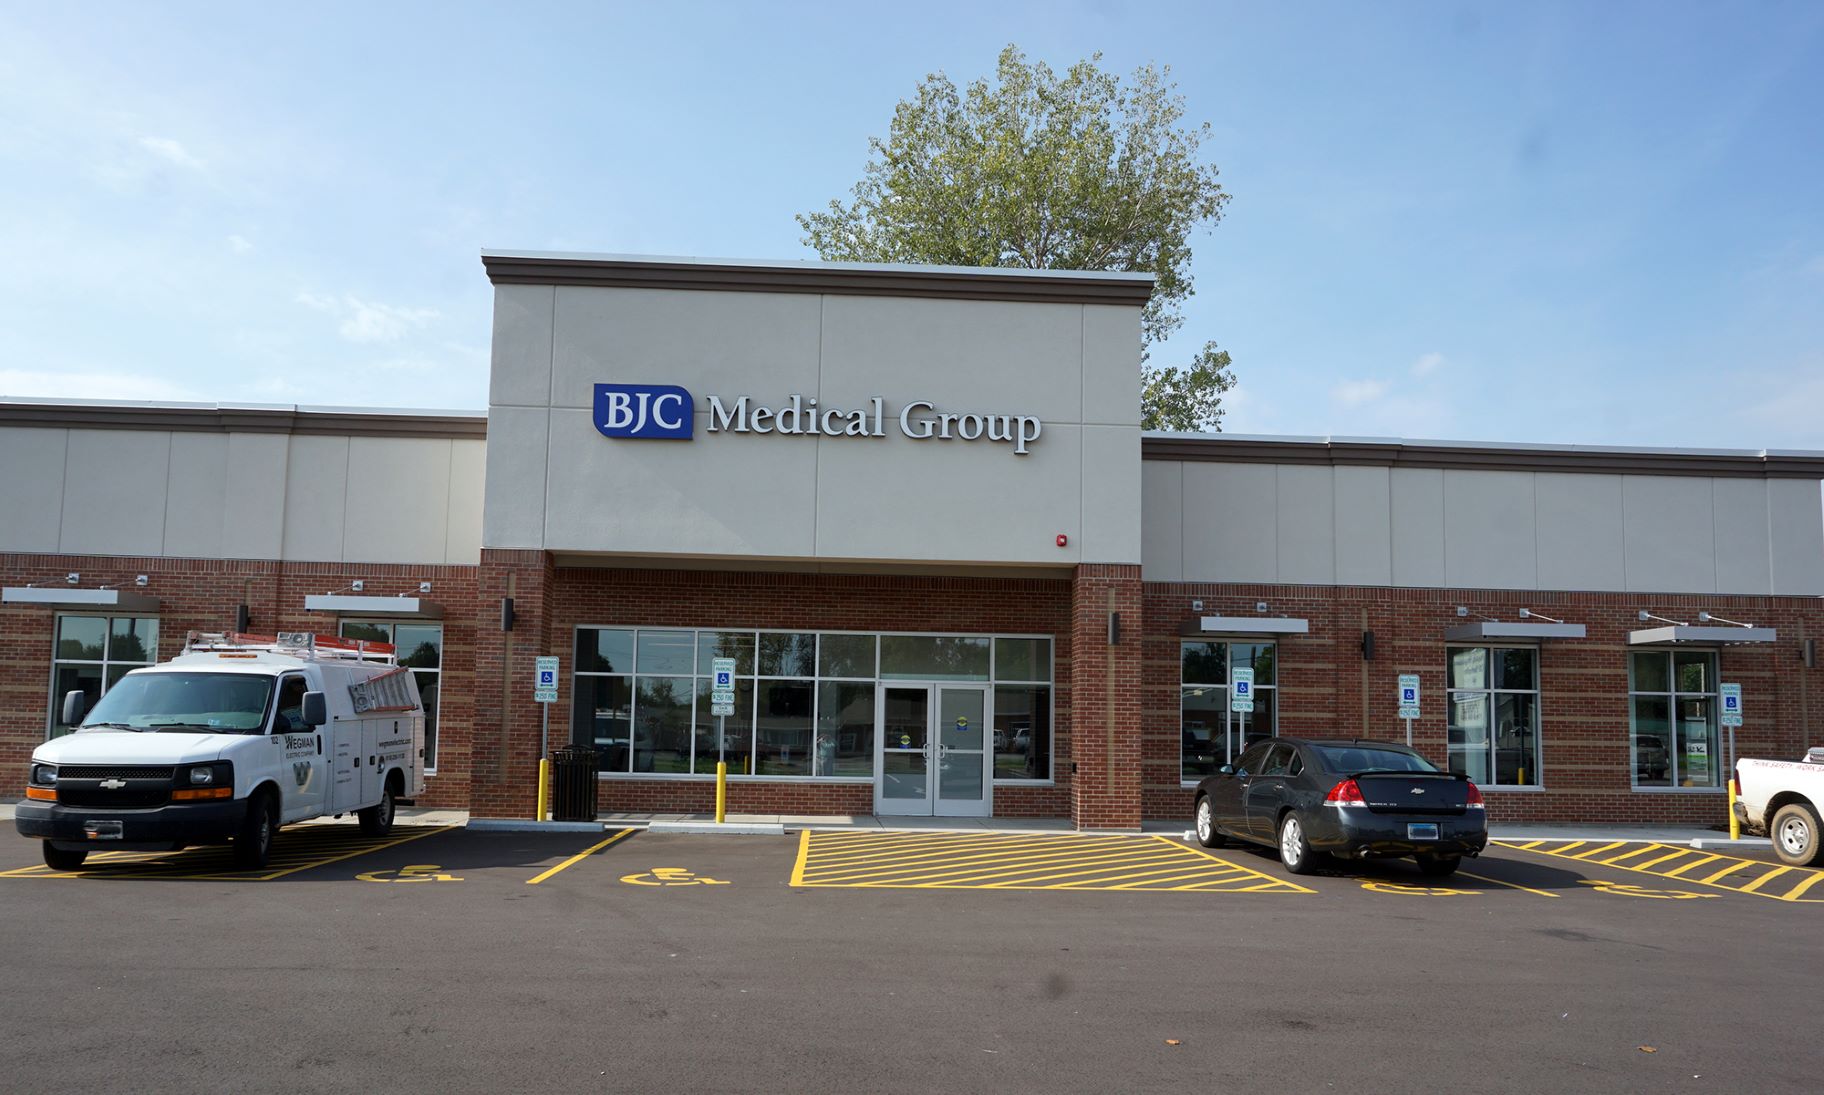 BJC Medical Group Convenient Care at Bethalto